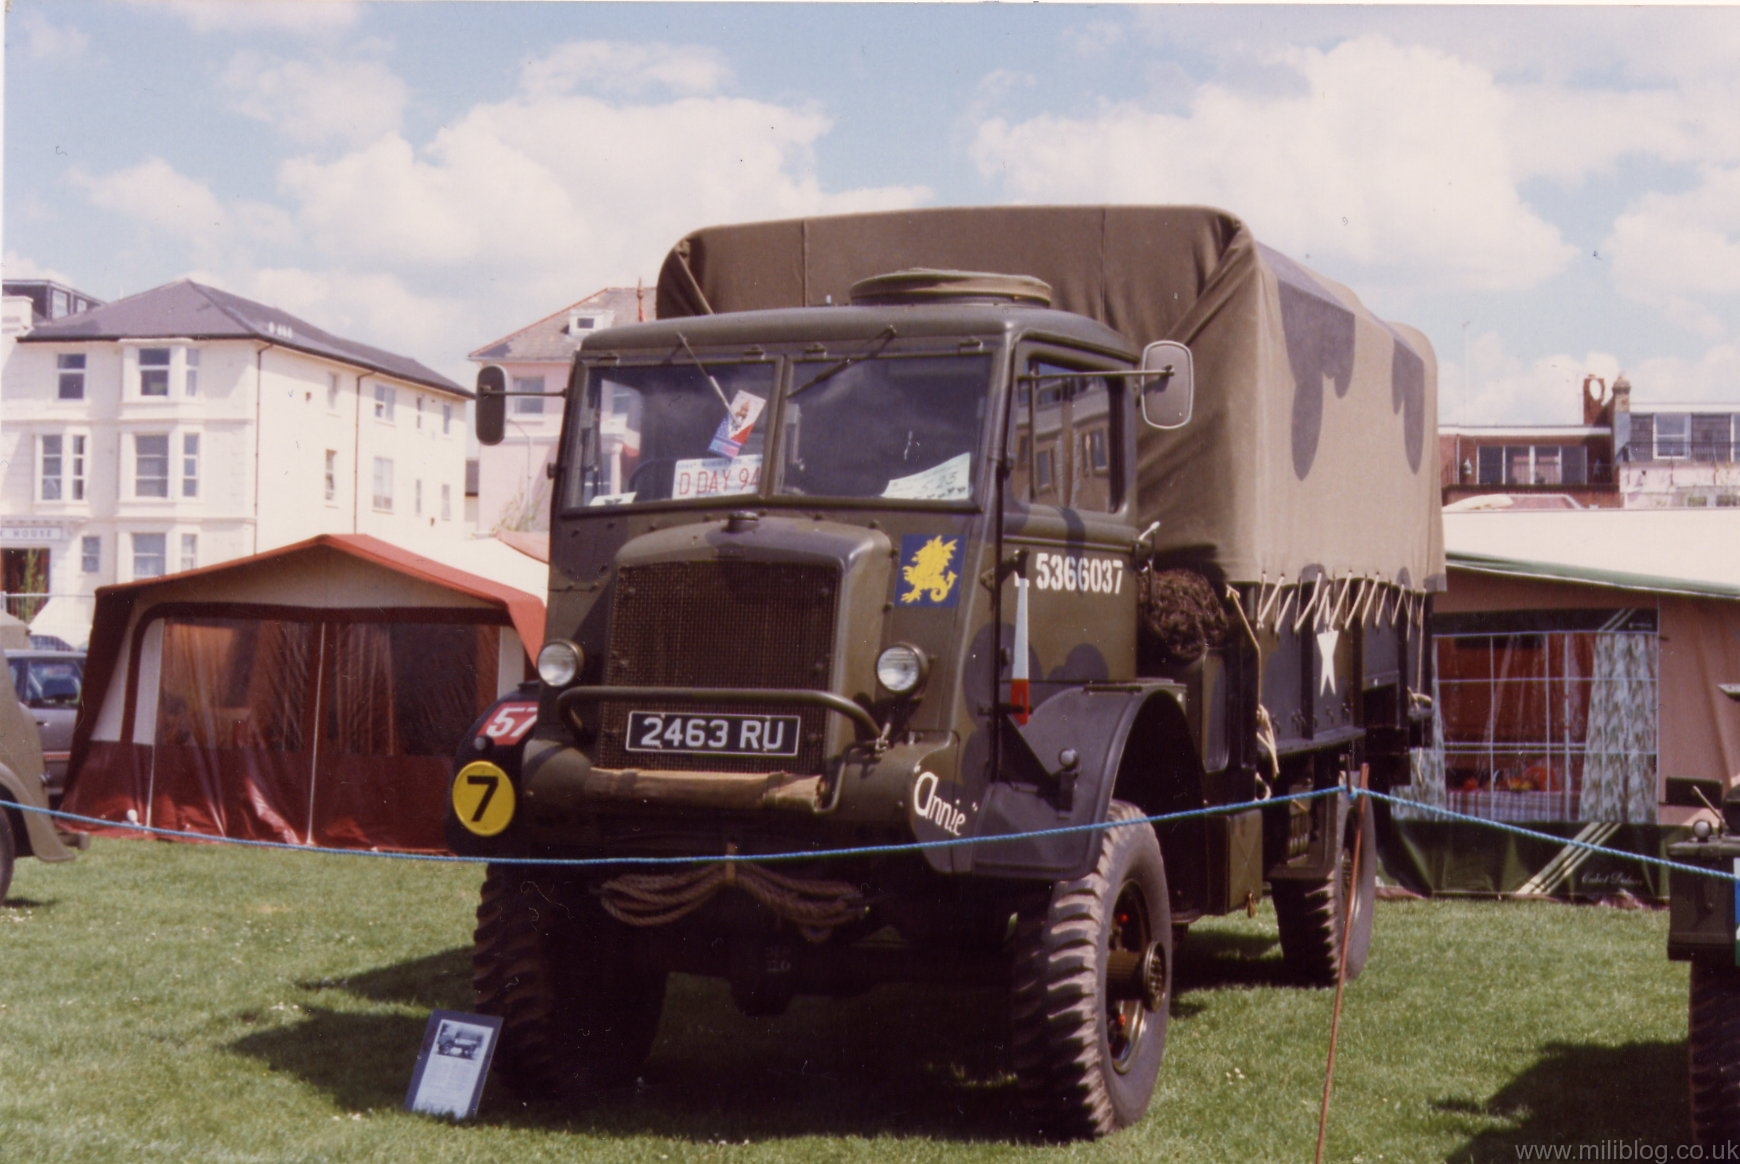 Military items | Military vehicles | Military trucks | Military ...